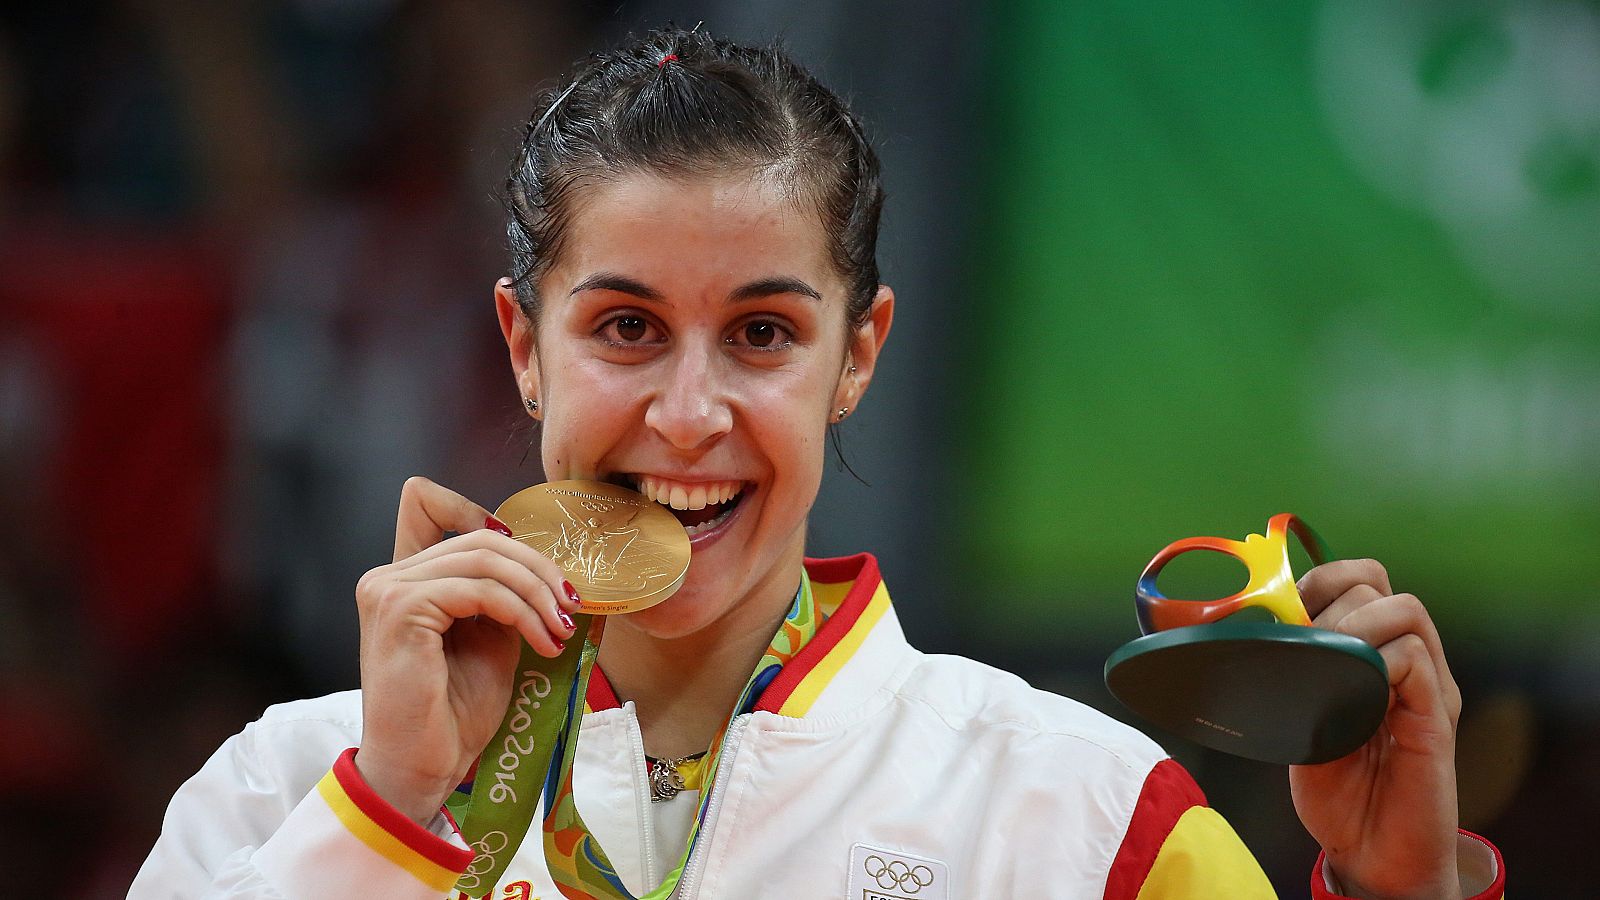 Álvarez café - Programa 8: Carolina Marín, campeona olímpica y mundial de bádminton - RTVE.es